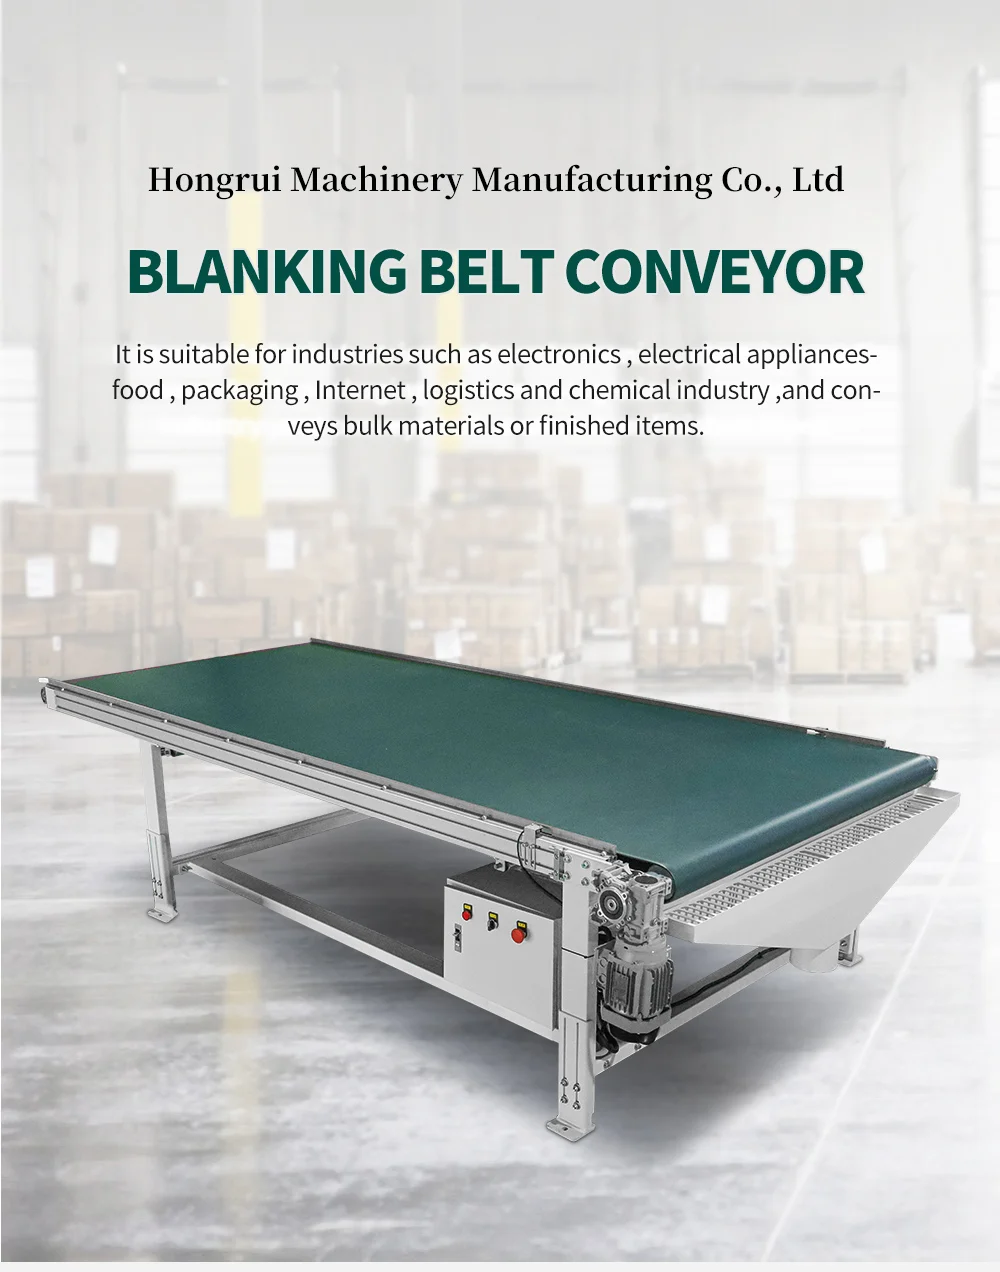 Hongrui adjustable speed belt conveyor flat belt conveyor blanking machine details